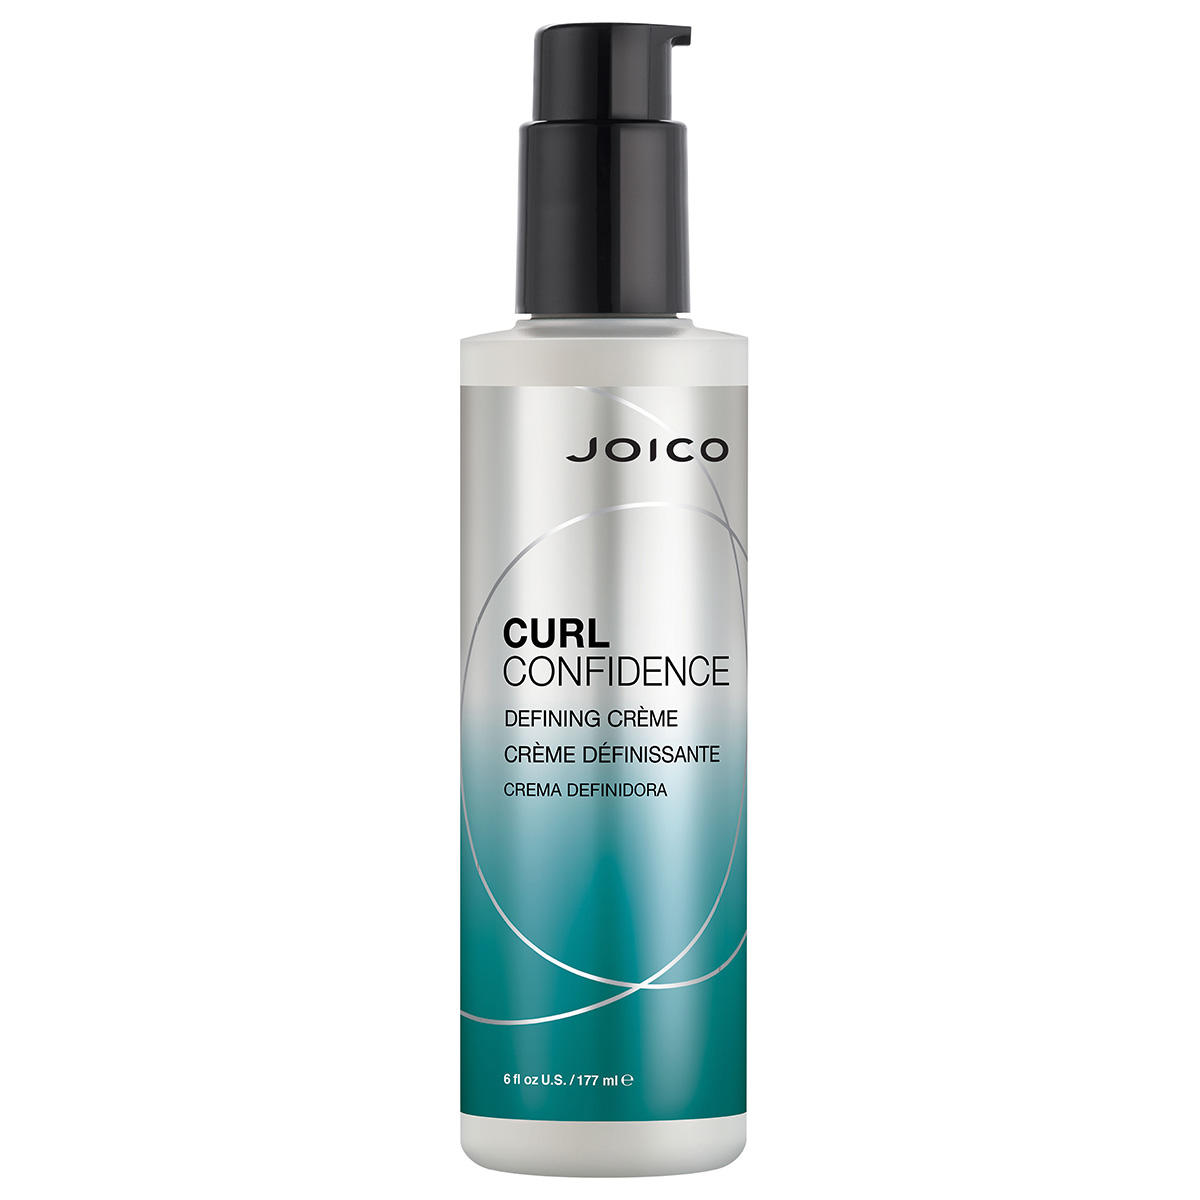 JOICO Curl Confidence Defining Crème 177 ml - 1